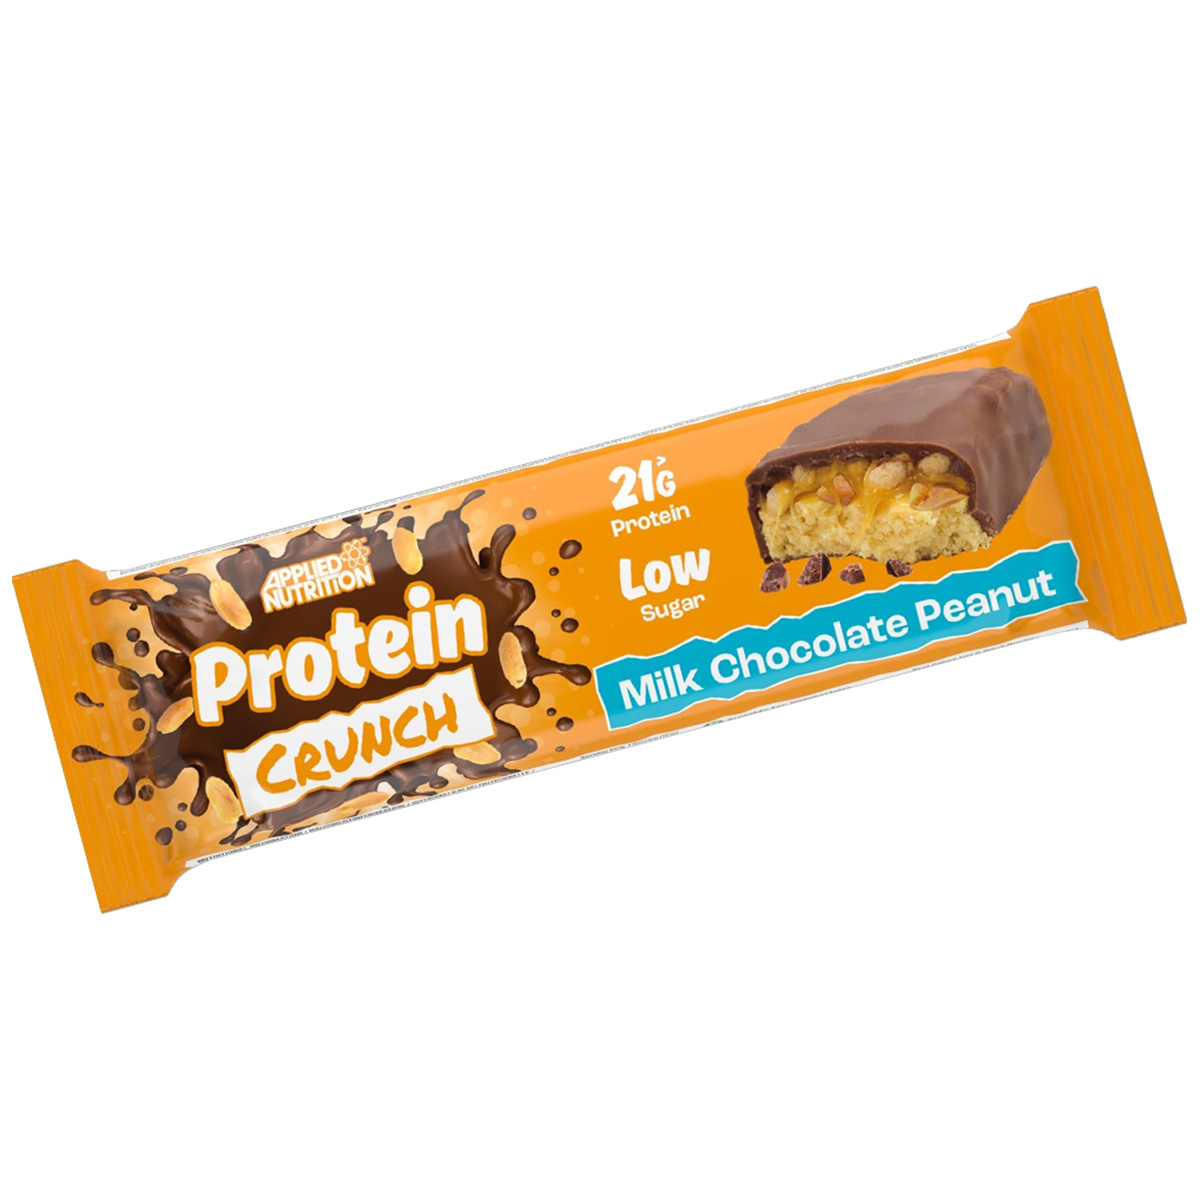 Applied Nutrition Protein Crunch Bar, Milk Chocolate Peanut, 1 Bar